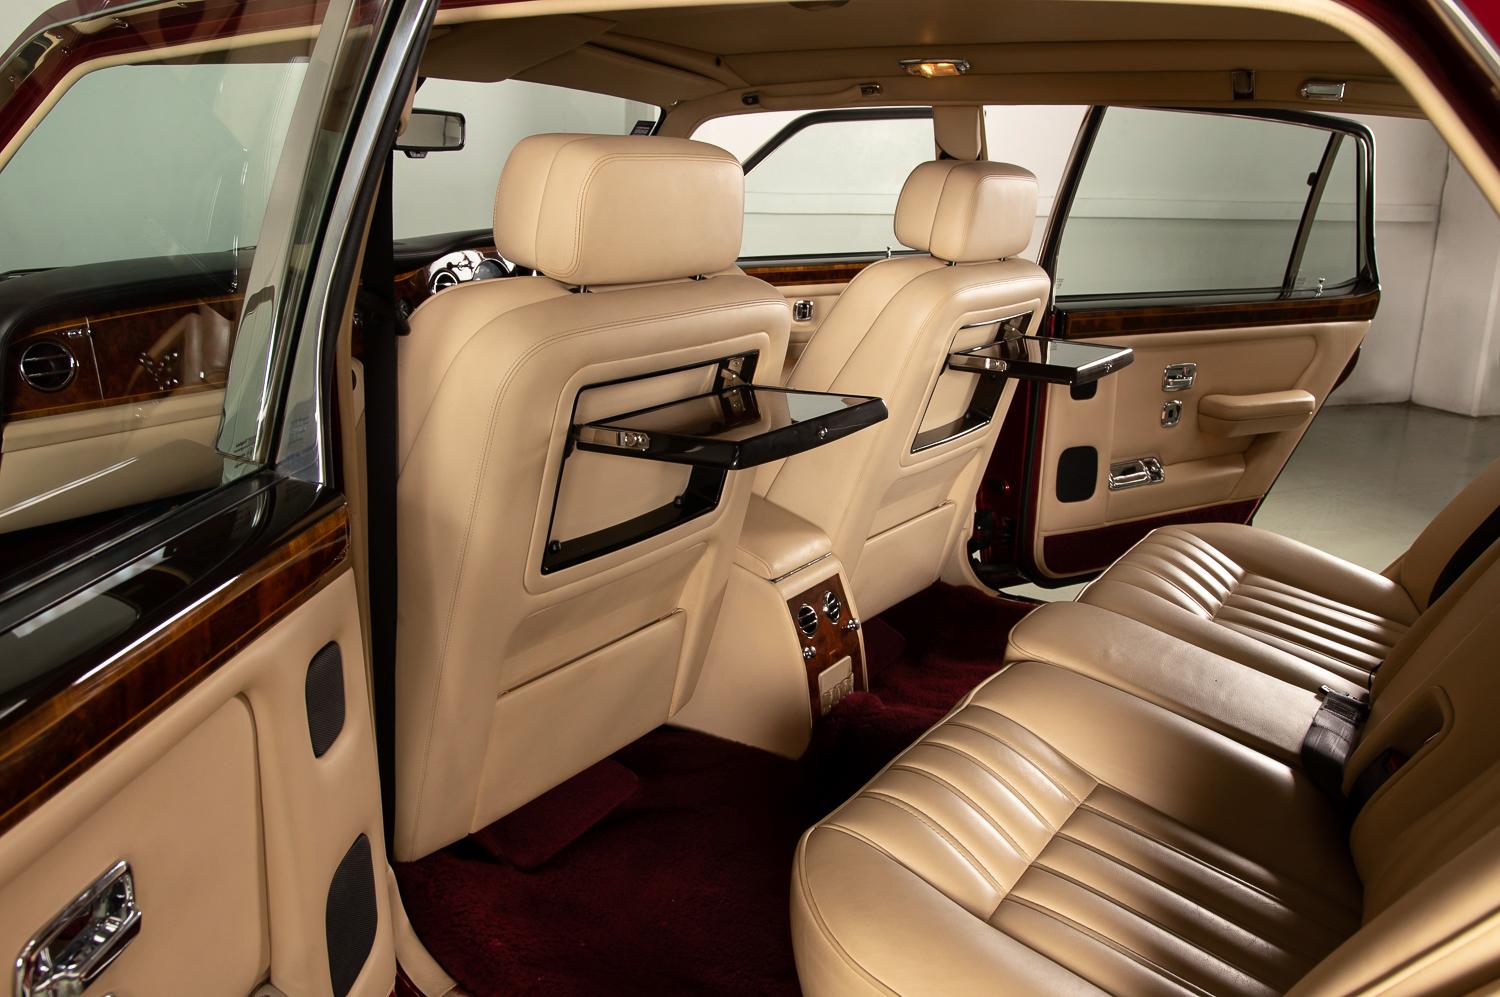 Rolls-Royce Silver Spur interior - Seats